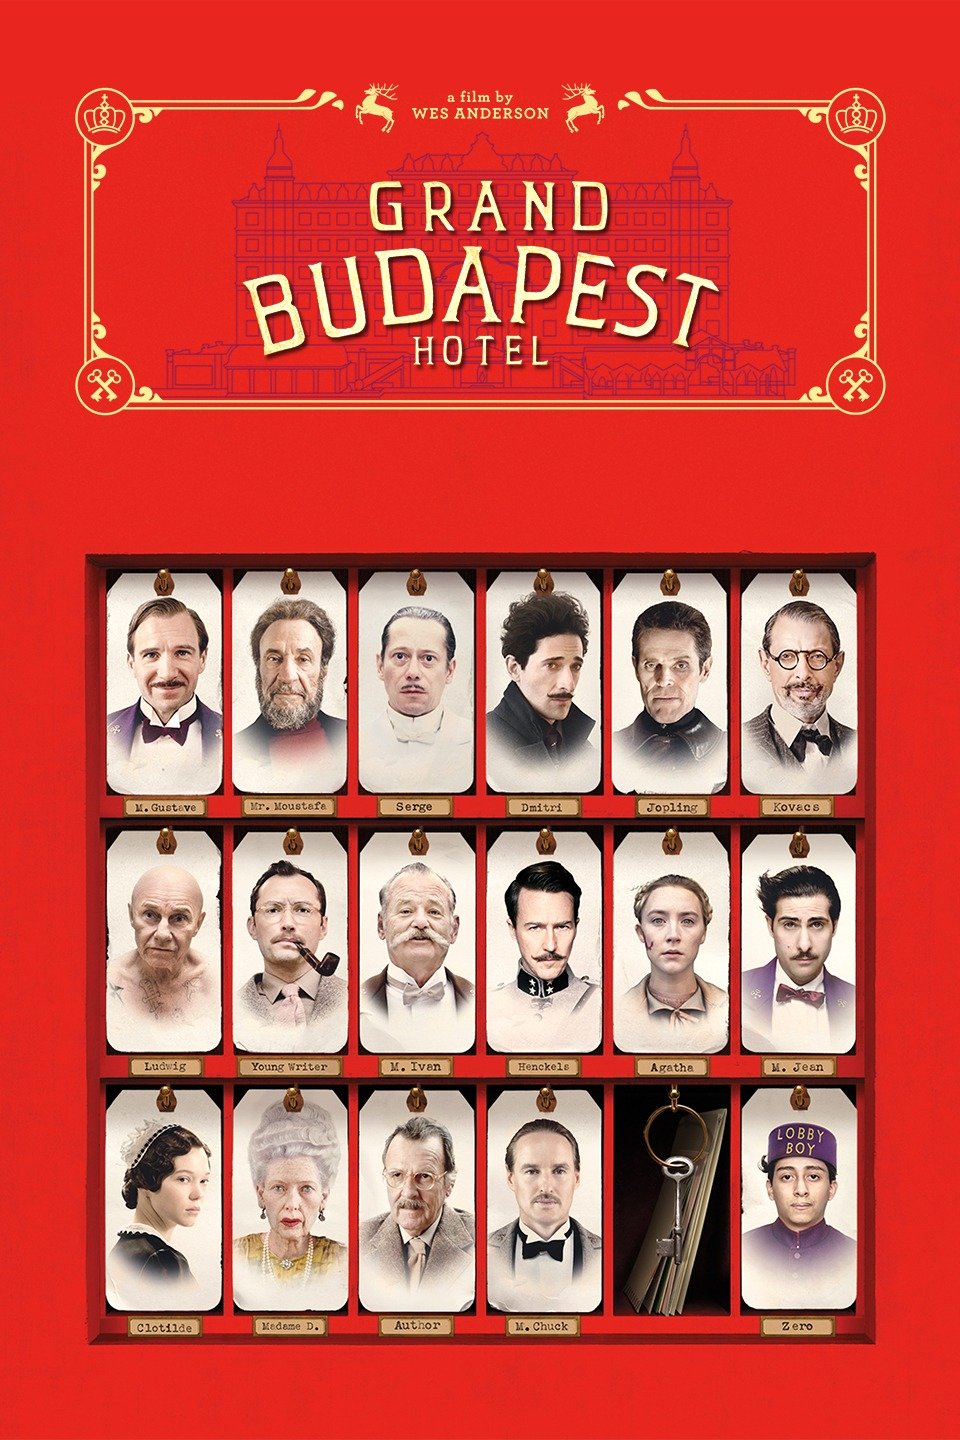 [MINI Super-HQ] The Grand Budapest Hotel (2014) คดีพิสดารโรงแรมแกรนด์บูดาเปสต์ [1080p] [พากย์ไทย 5.1 + เสียงอังกฤษ DTS] [บรรยายไทย + อังกฤษ] [เสียงไทย + ซับไทย]